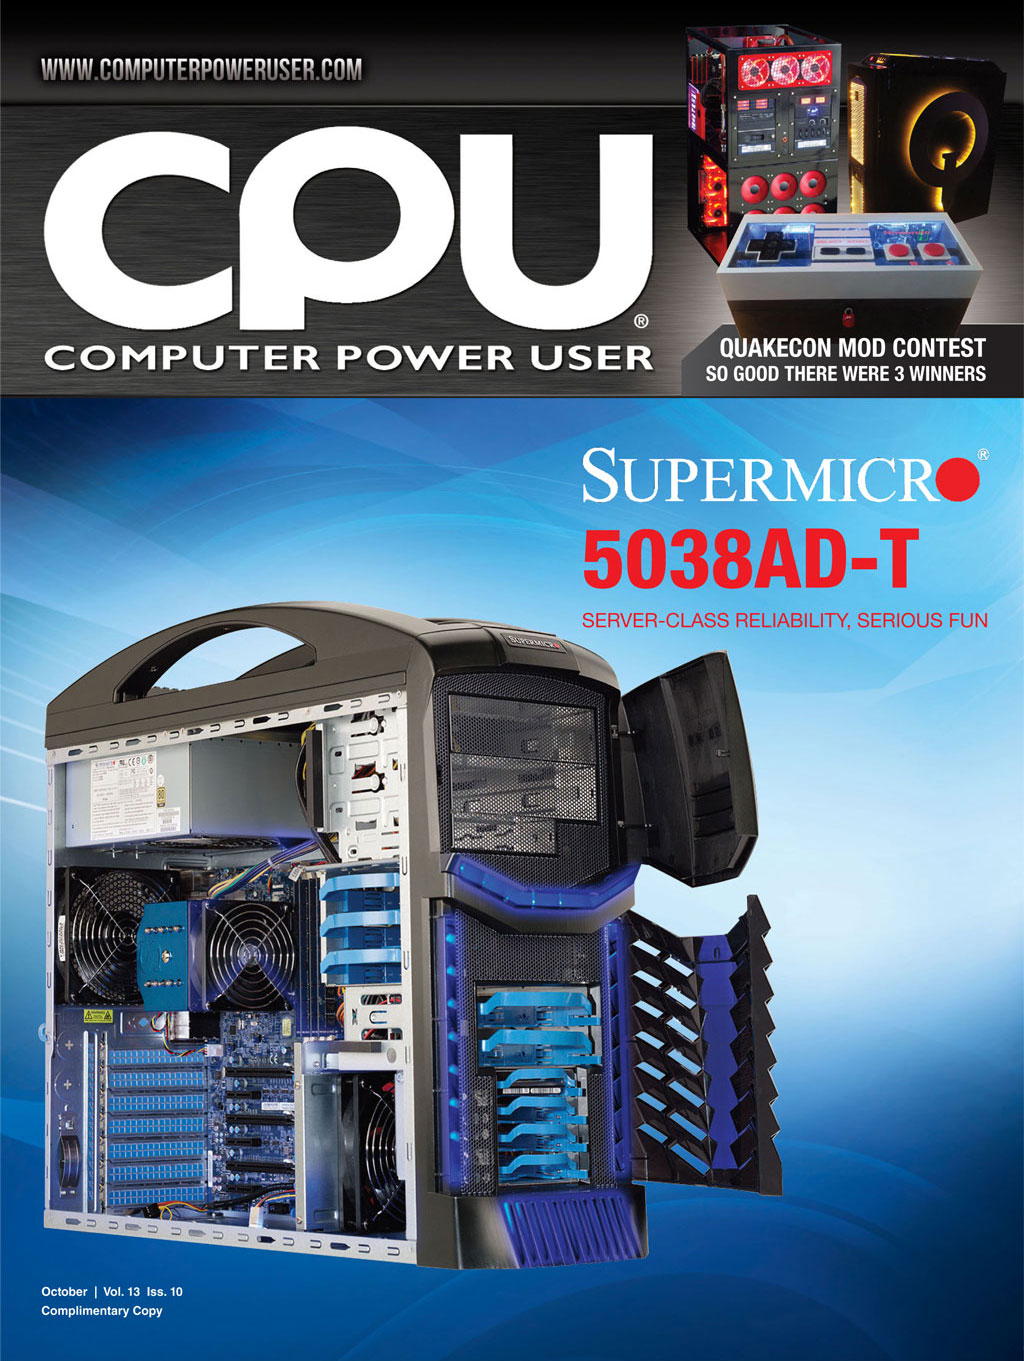 Компьютерное железо журнал. CPU Power. Power user. Powerful Computers.